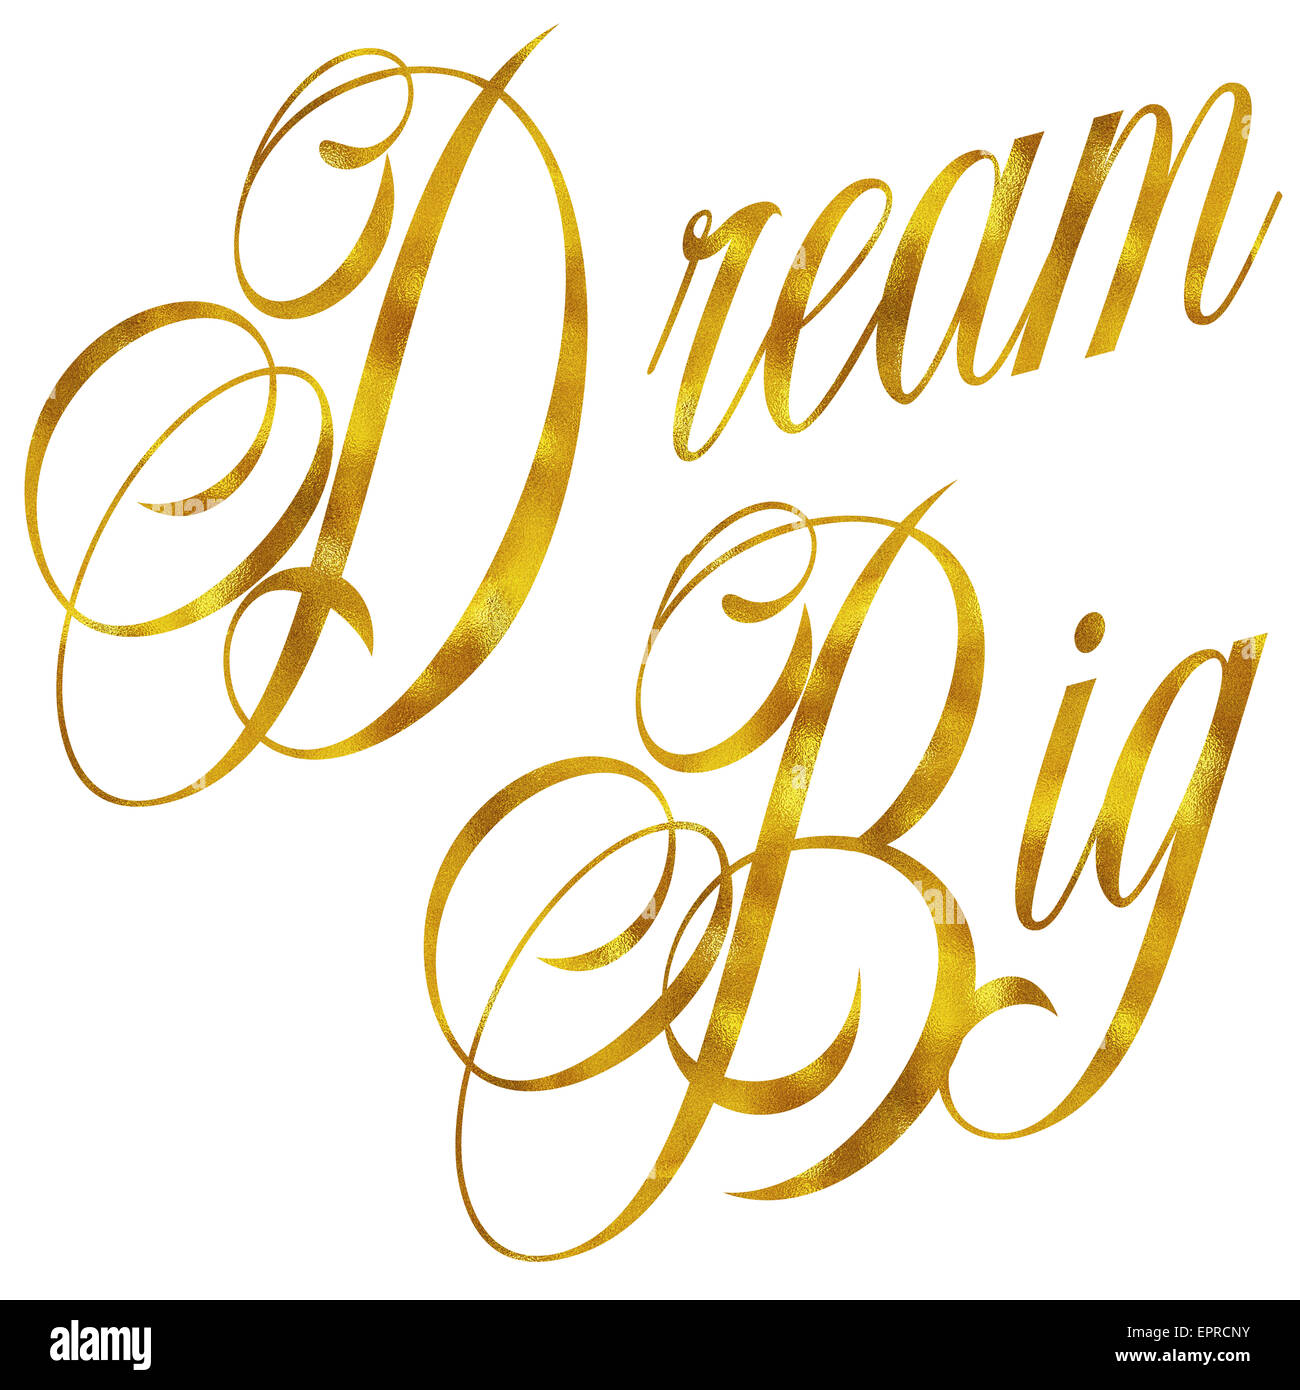 Dream Big Gold Faux Folie Metallic Glitter Zitat Isolated on White Background Stockfoto